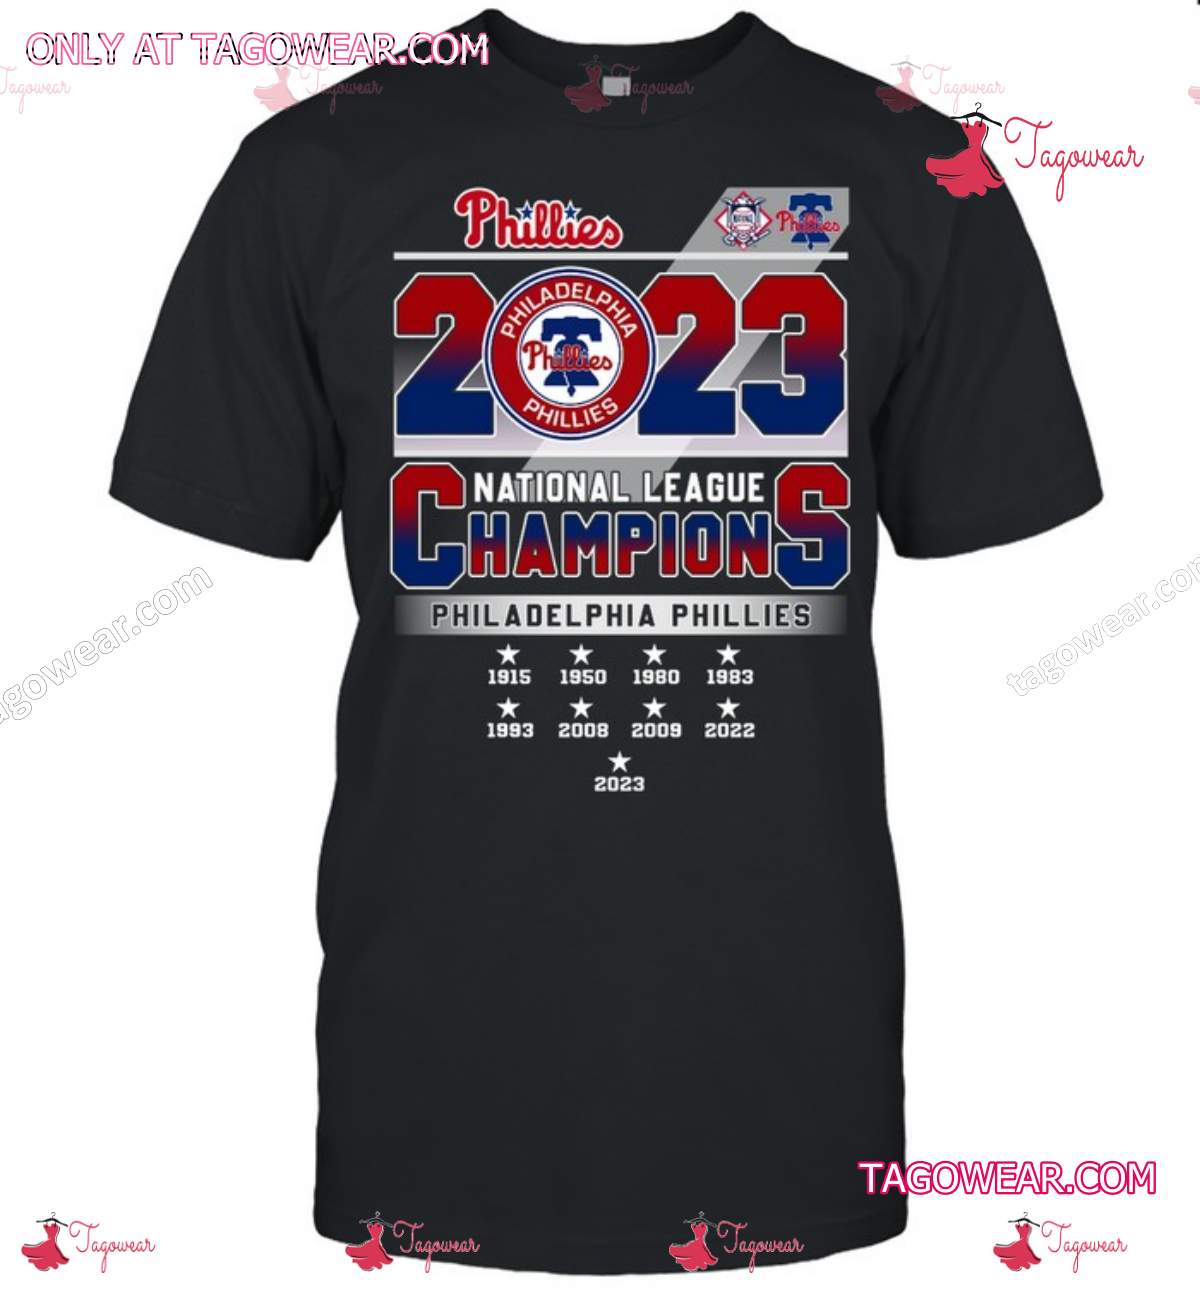 Philadelphia Phillies 2023 National League Champions Shirt